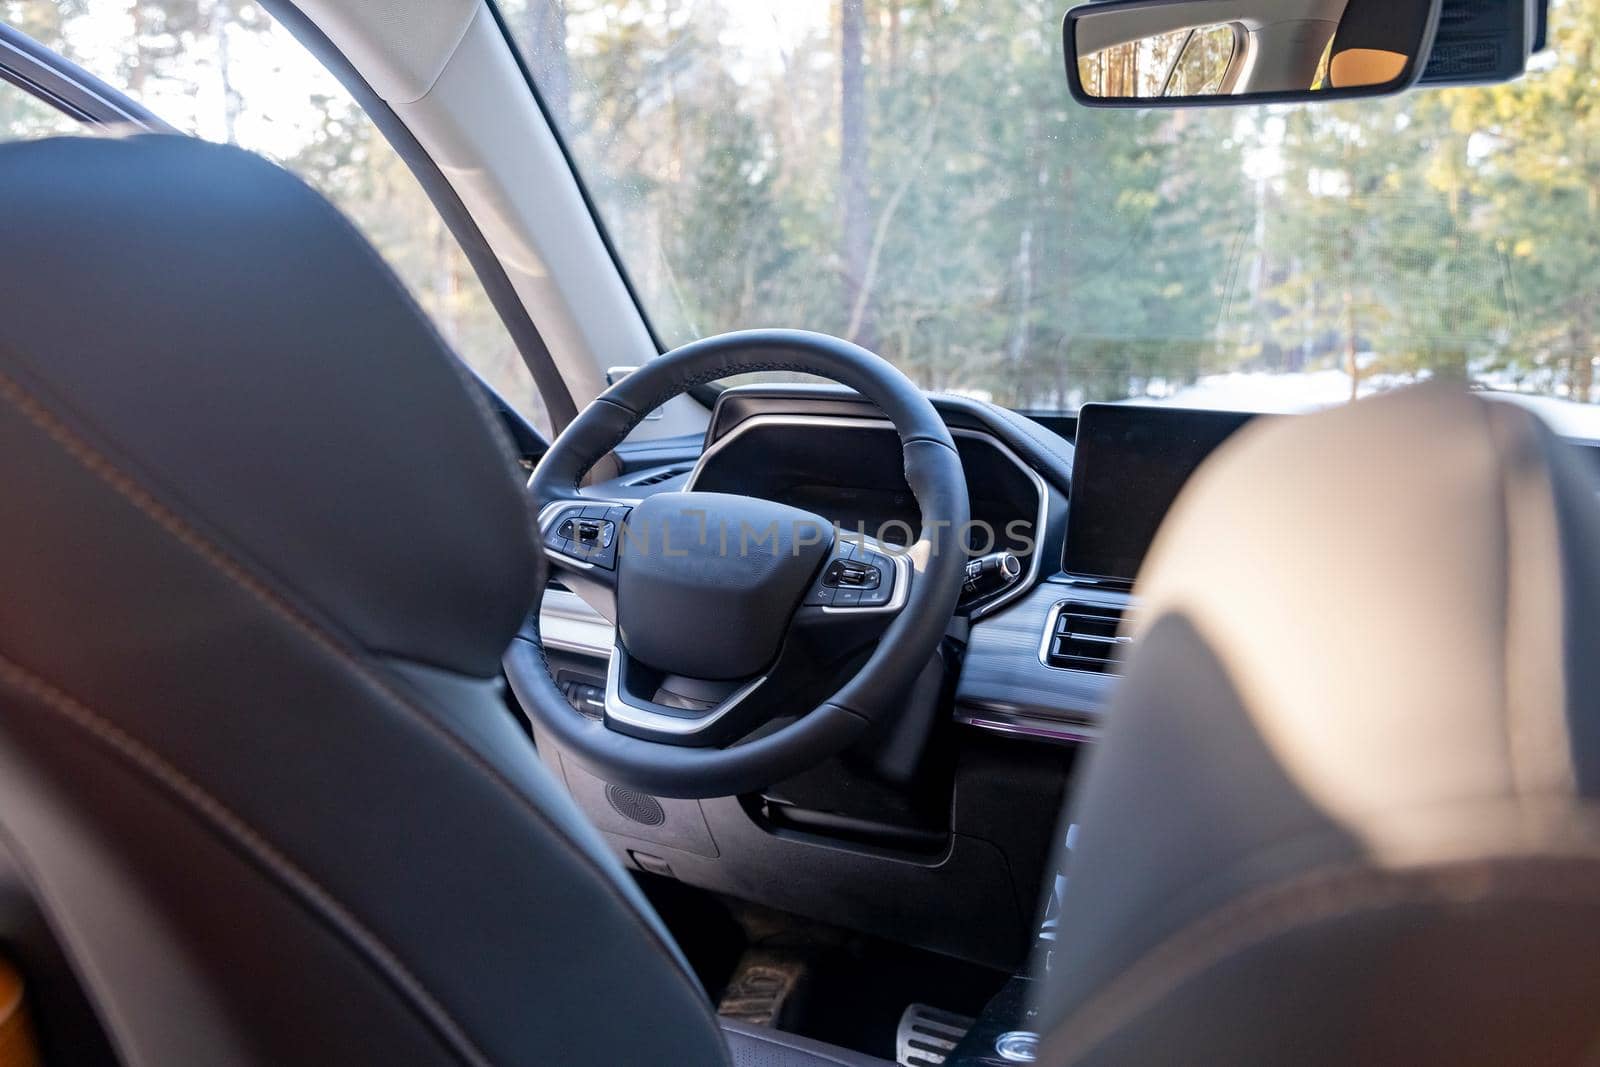 empty modern car interior. empty driver's seat in a premium modern car. steering wheel